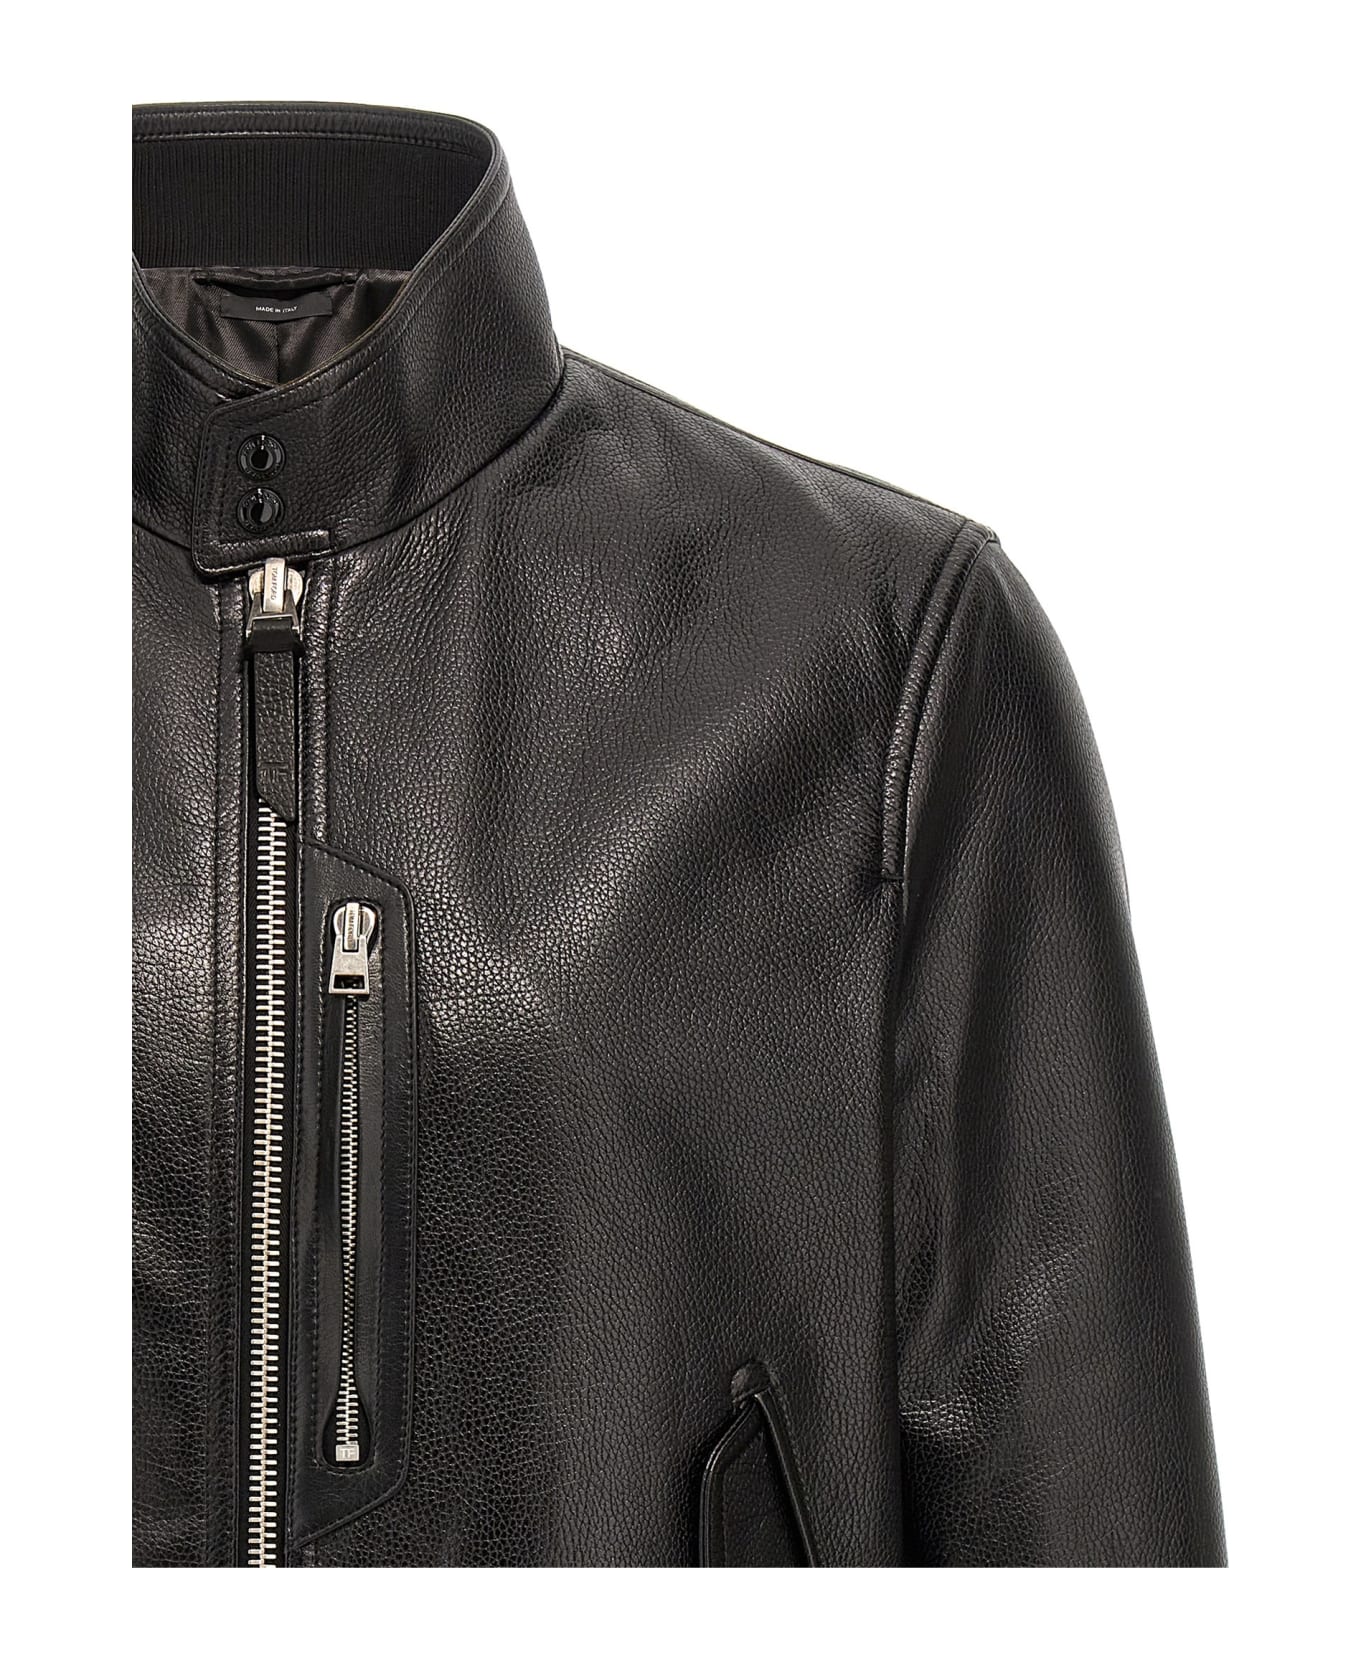 Tom Ford Grainy Leather Bomber Jacket - BLACK レザージャケット